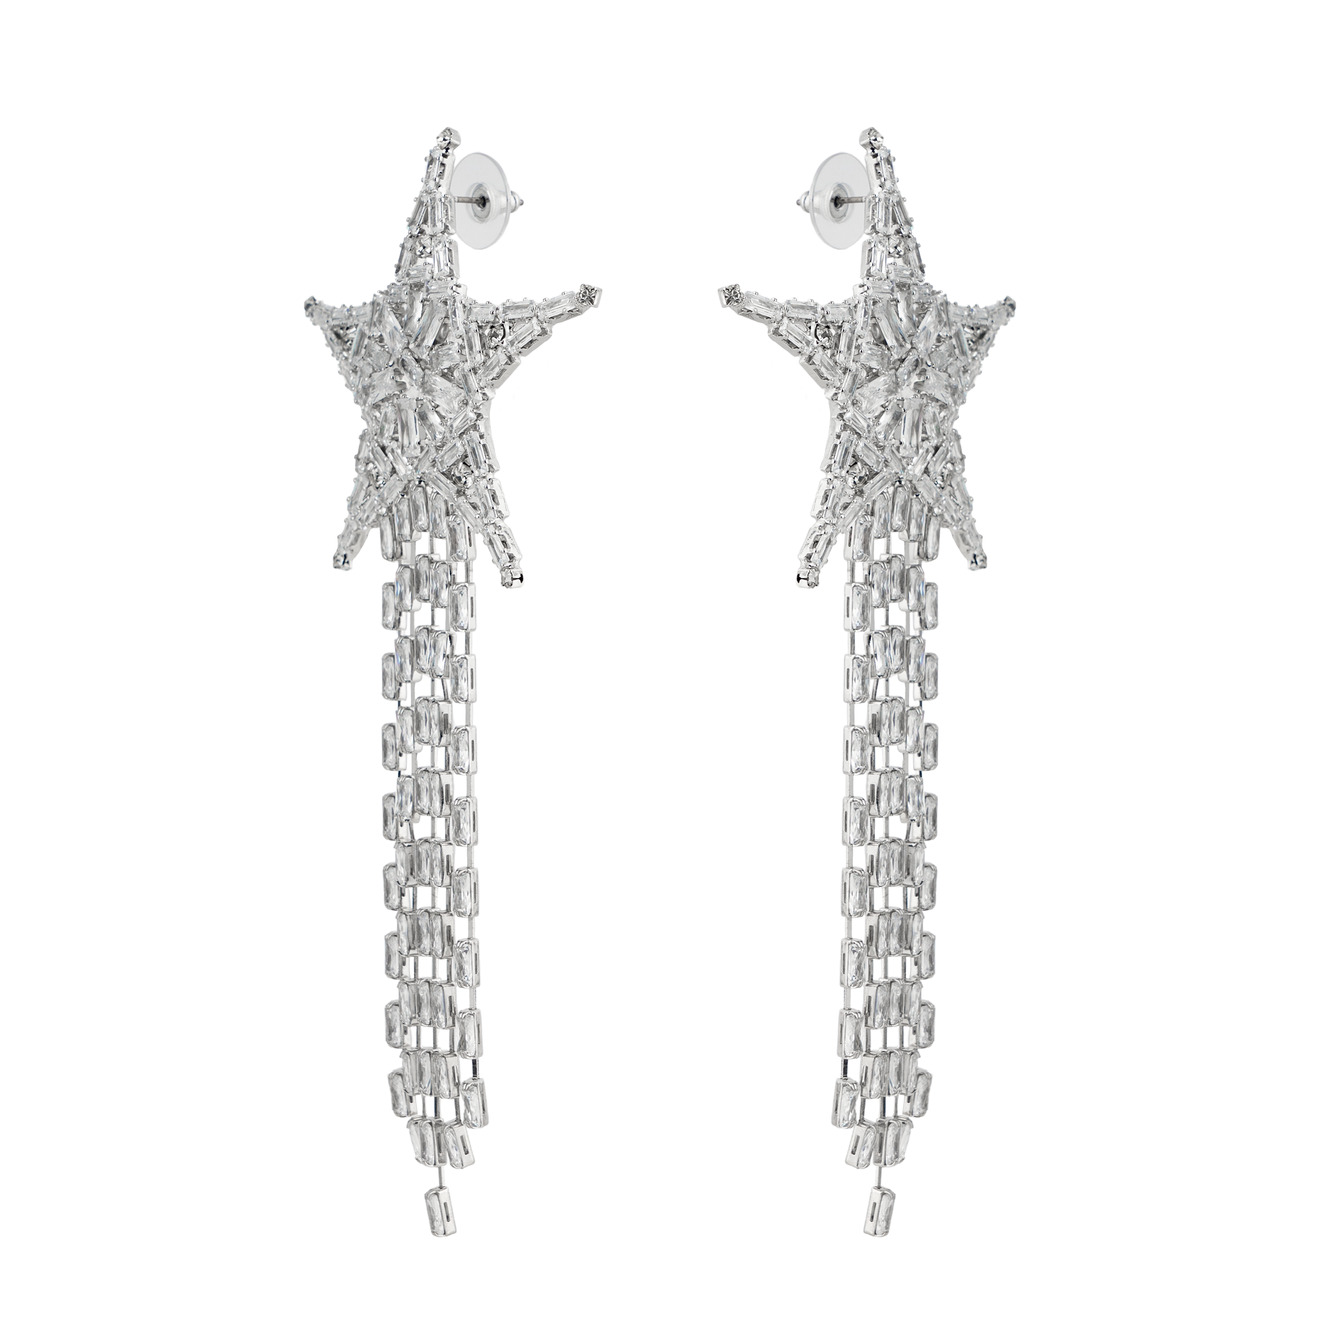 Herald Percy Серебристые бисерные серьги-звезды с кристаллами